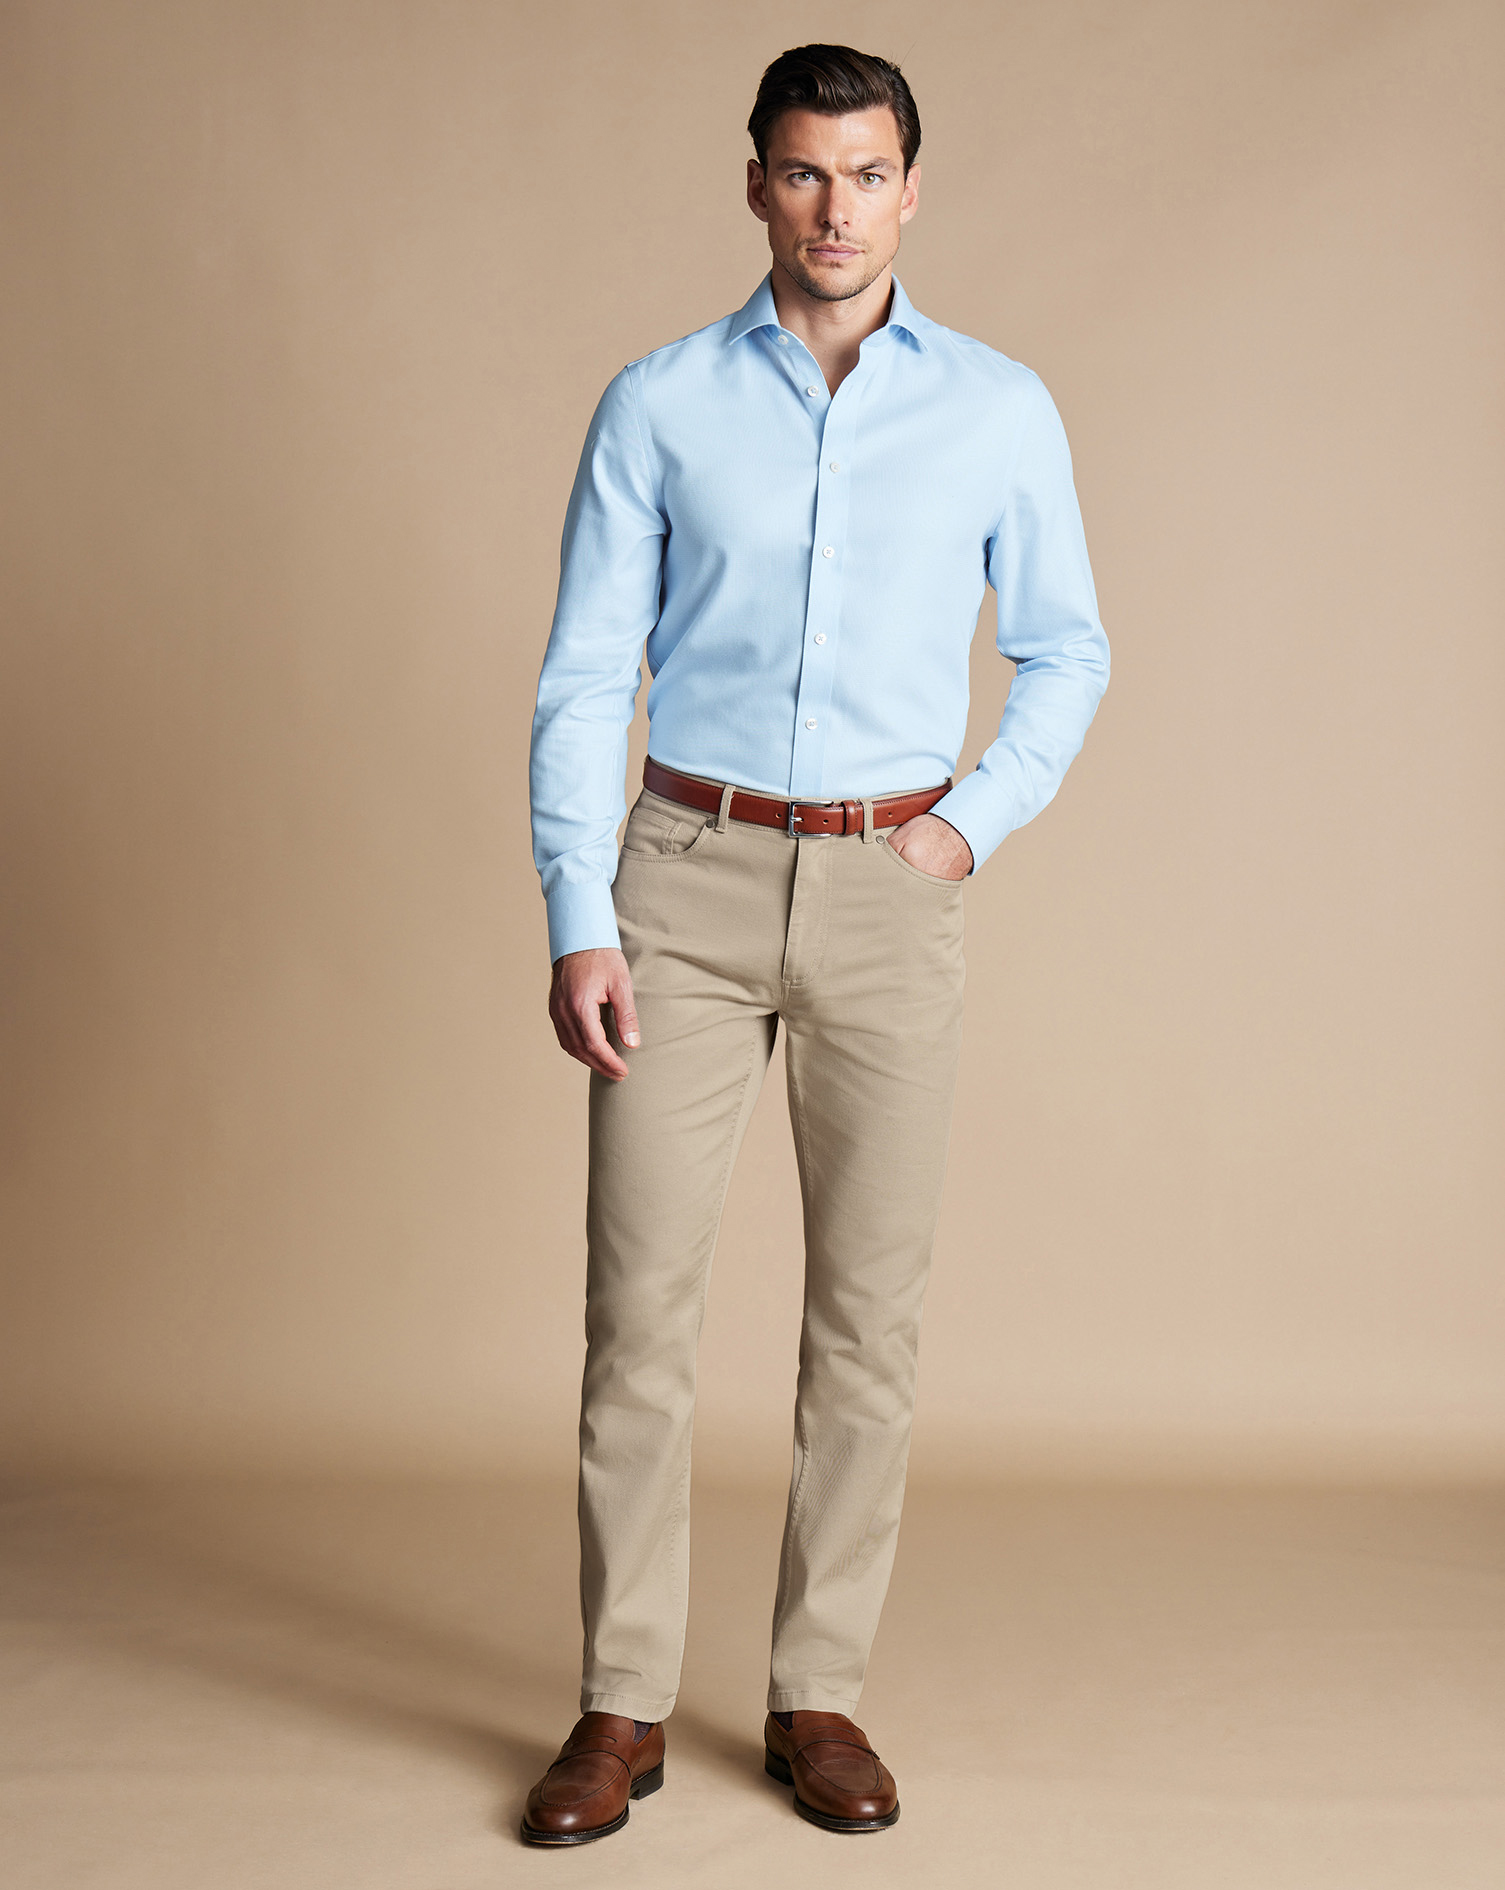 Men's Charles Tyrwhitt Twill 5 Pocket Jeans - Stone Neutral Size W40 L30 Cotton
